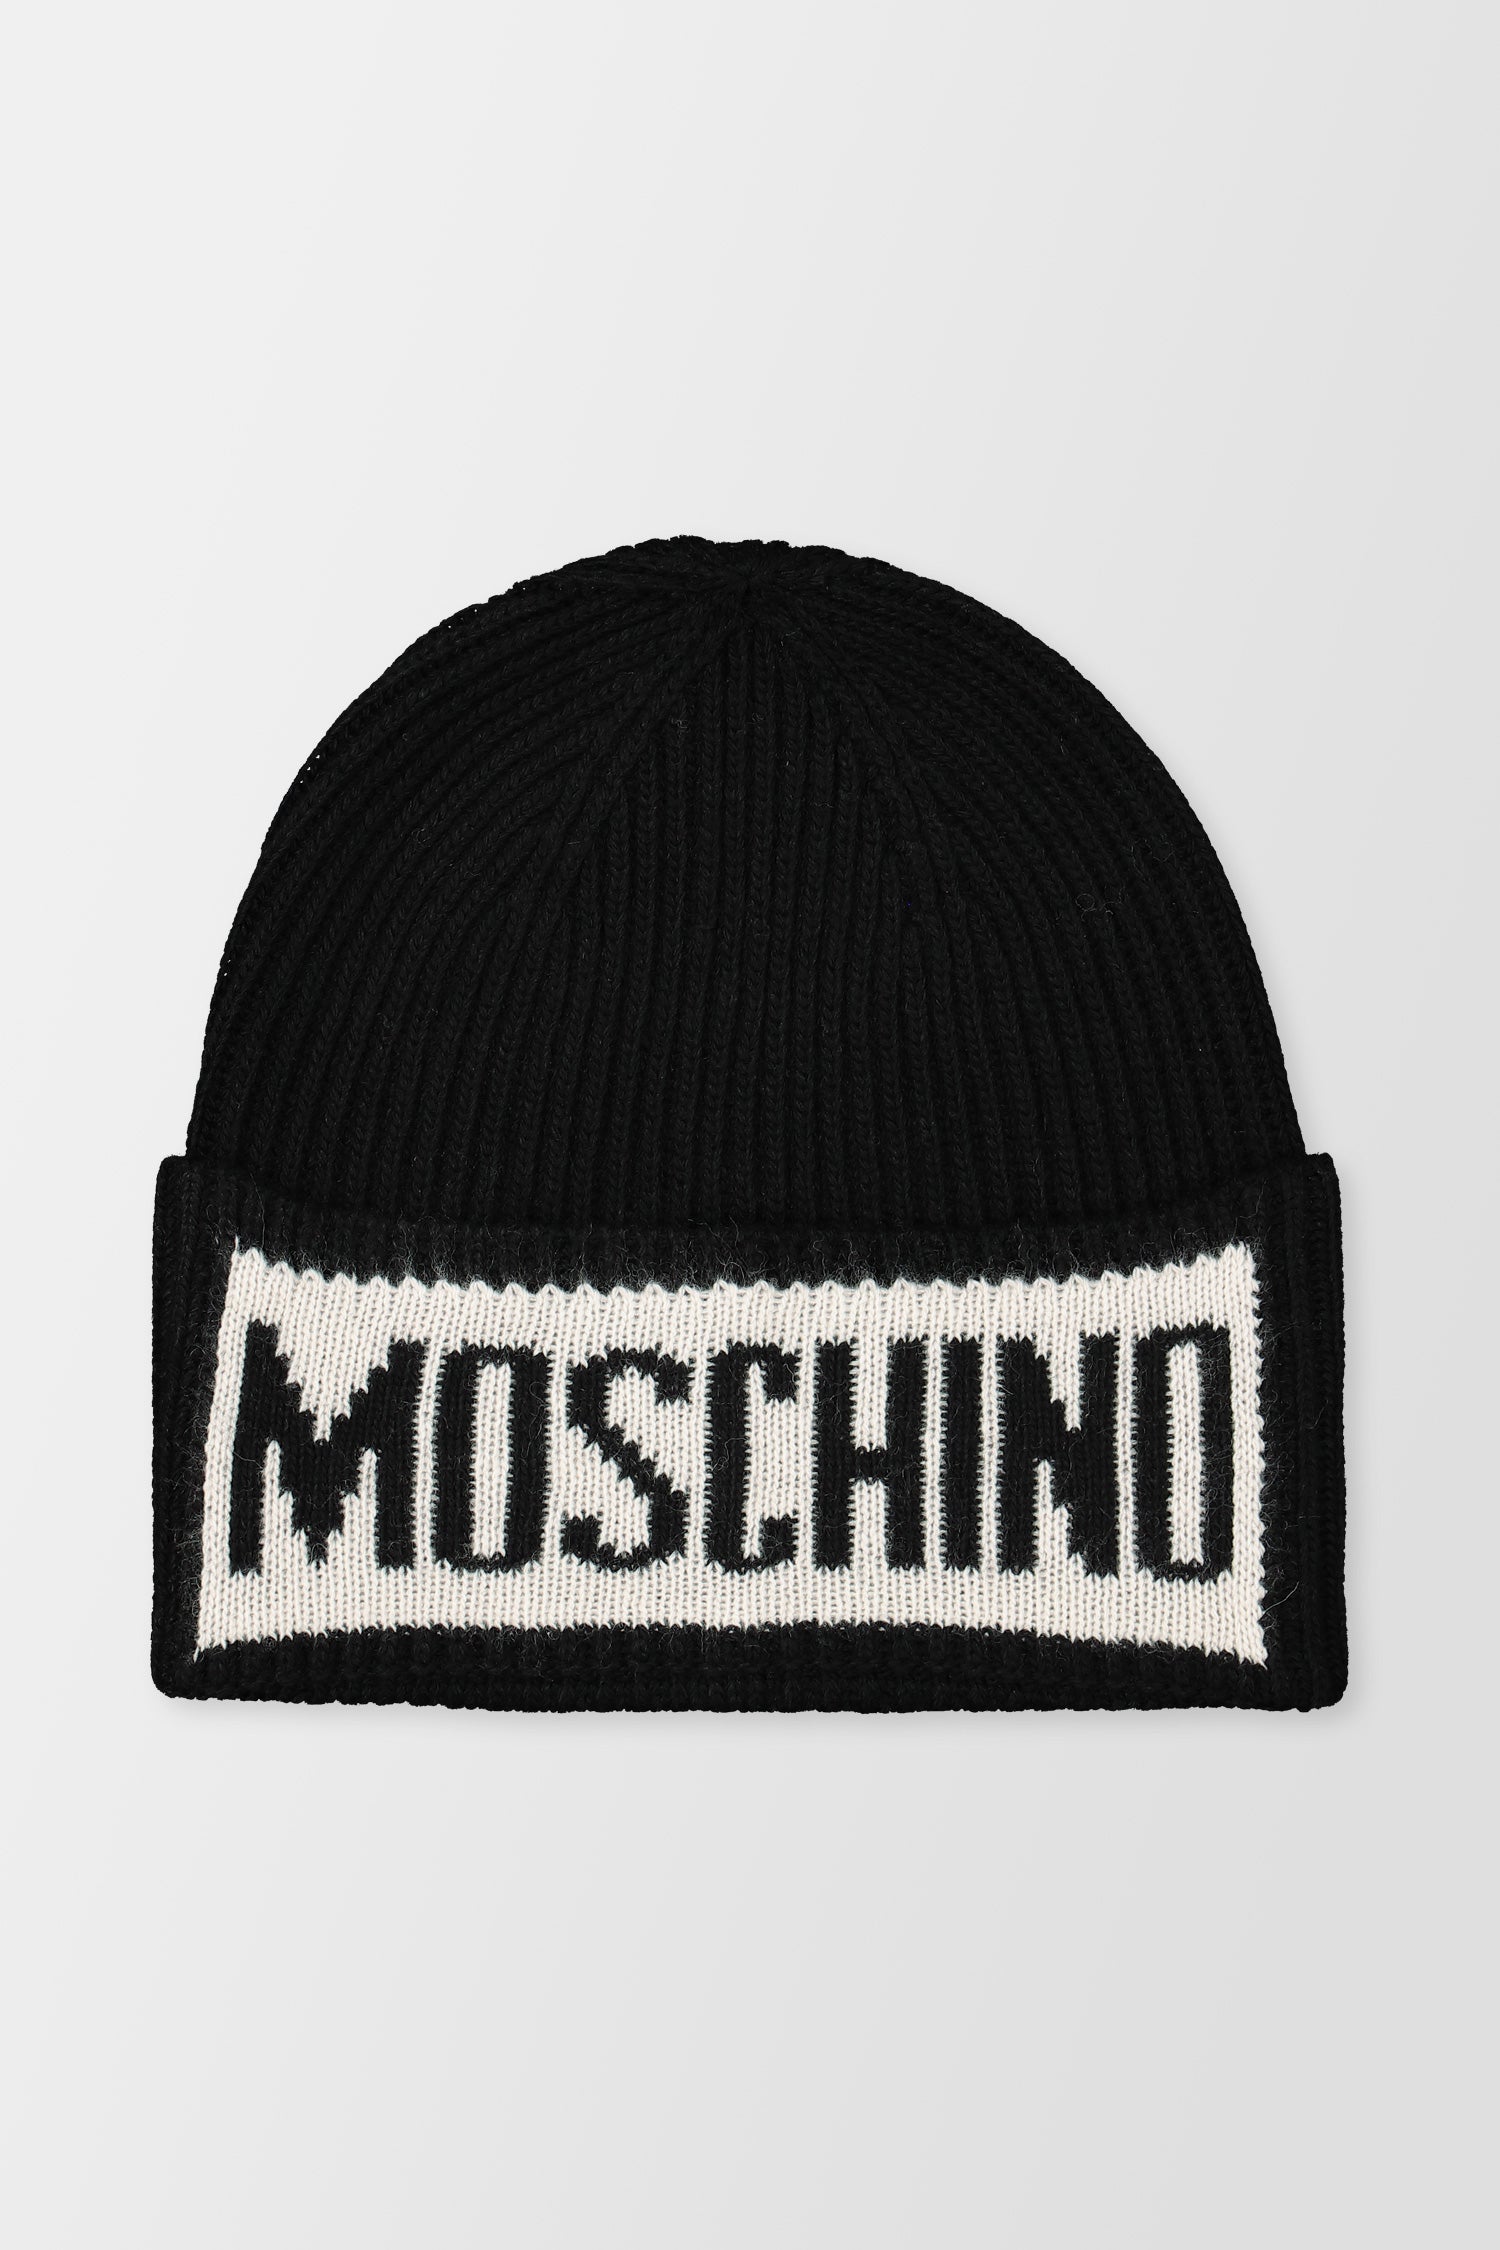 Moschino Black Hat